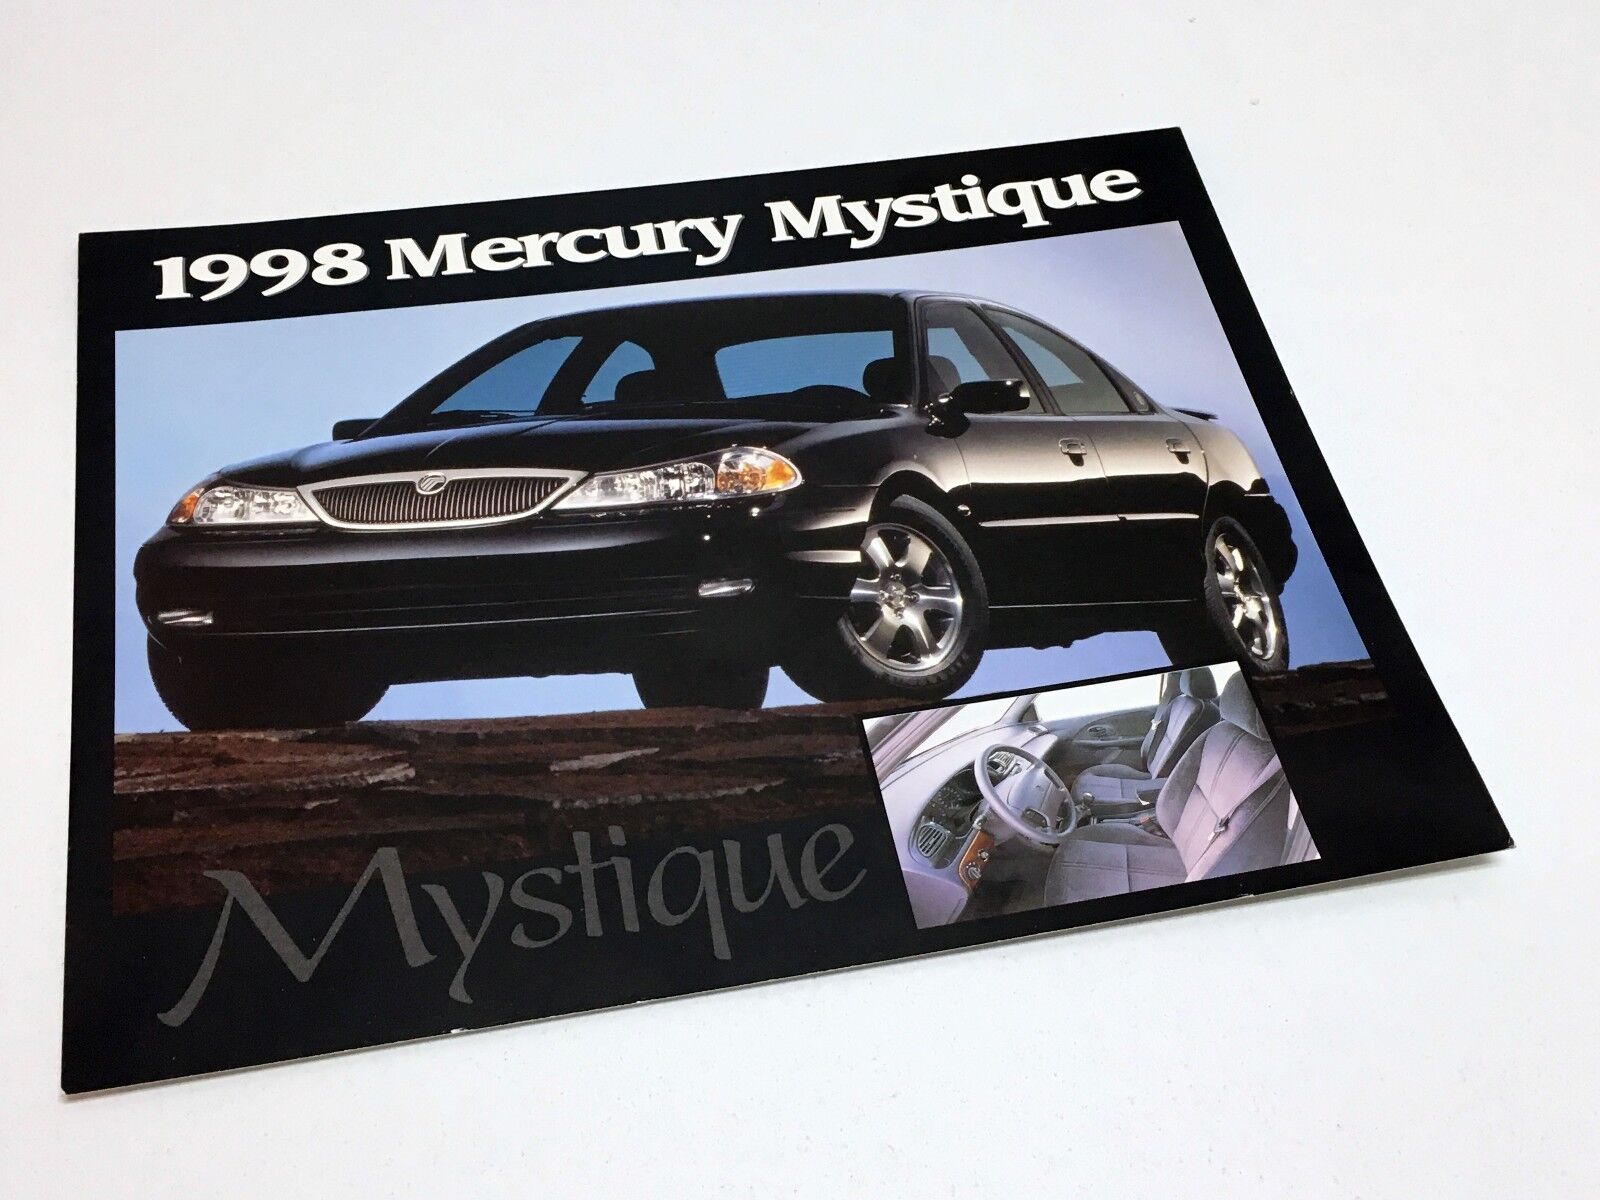 1998 Mercury Mystique Redesign Information Sheet Brochure | eBay